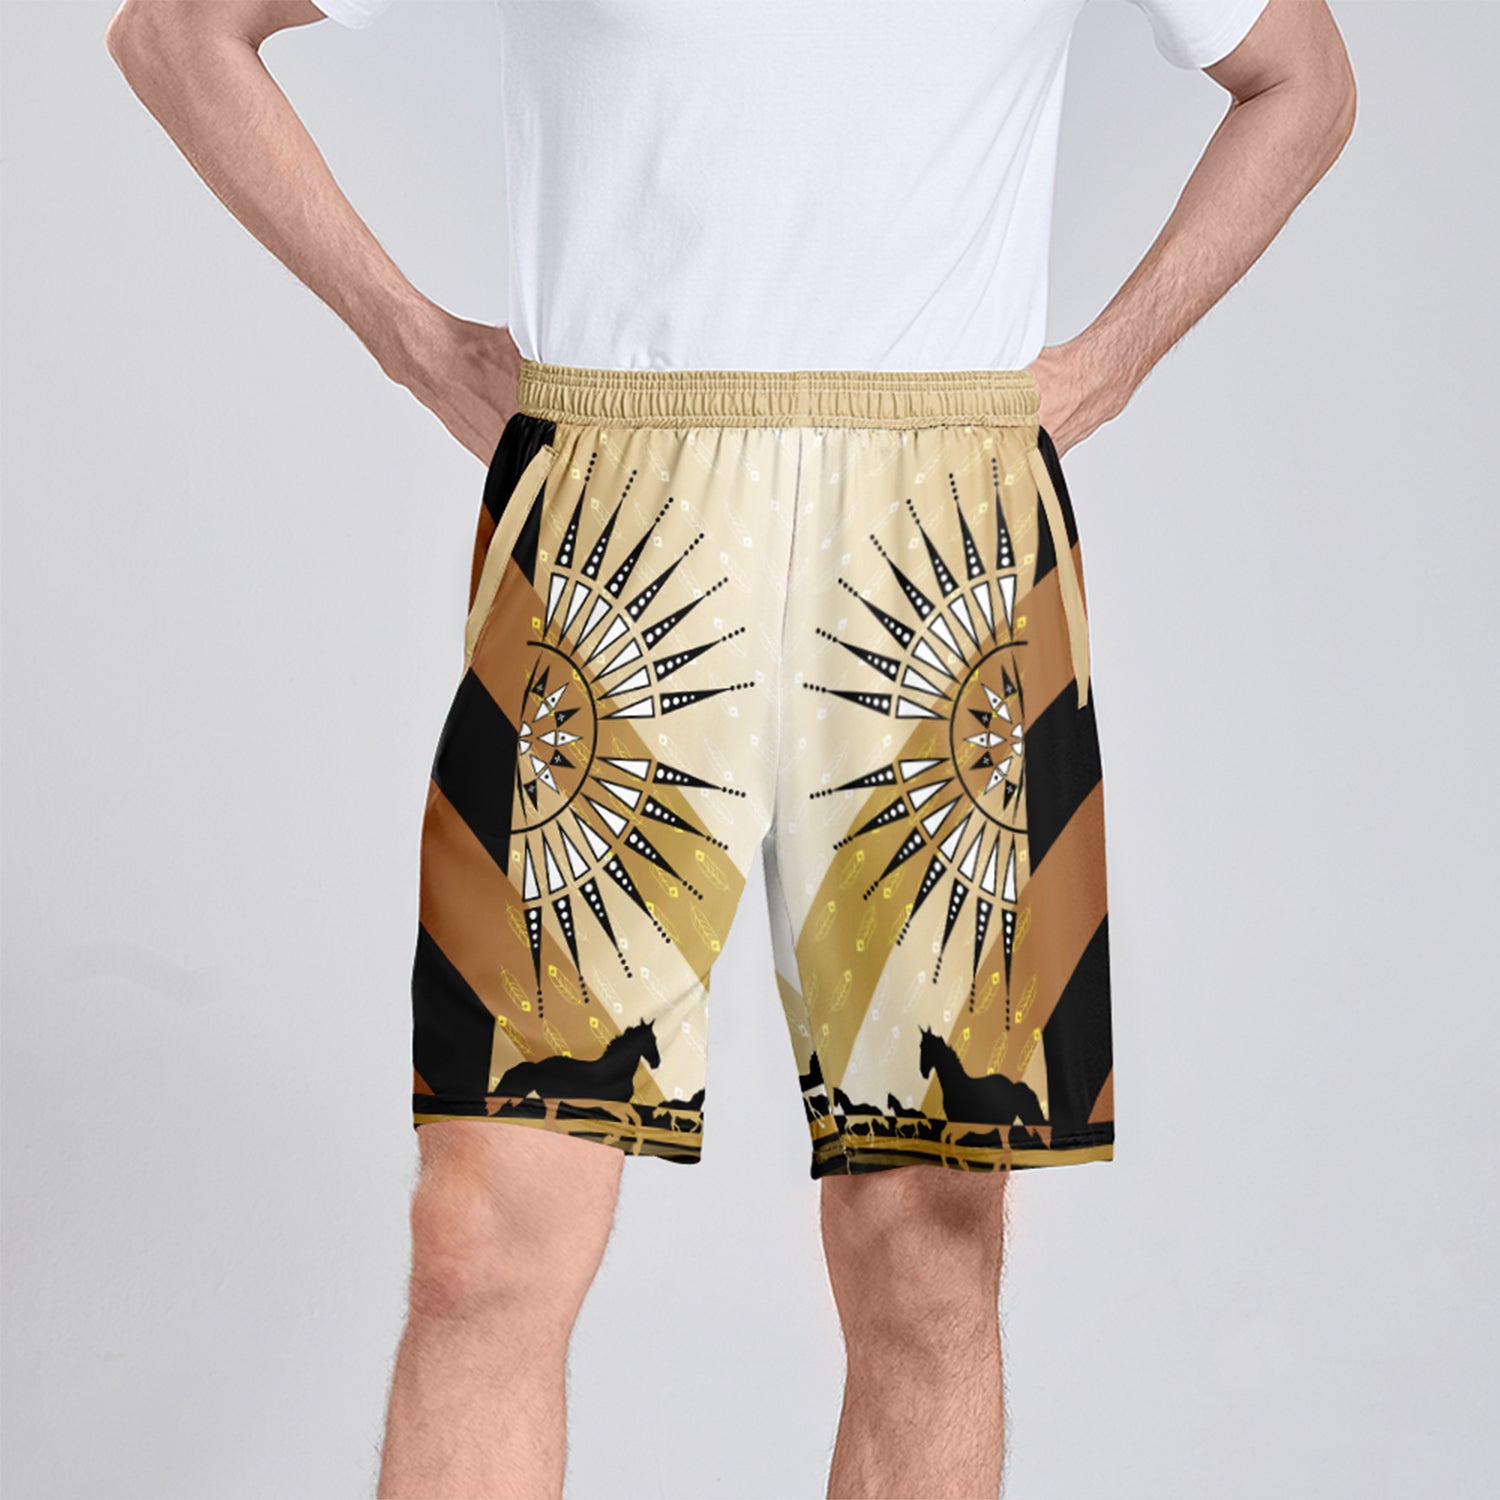 Stallion Skyline Athletic Shorts with Pockets